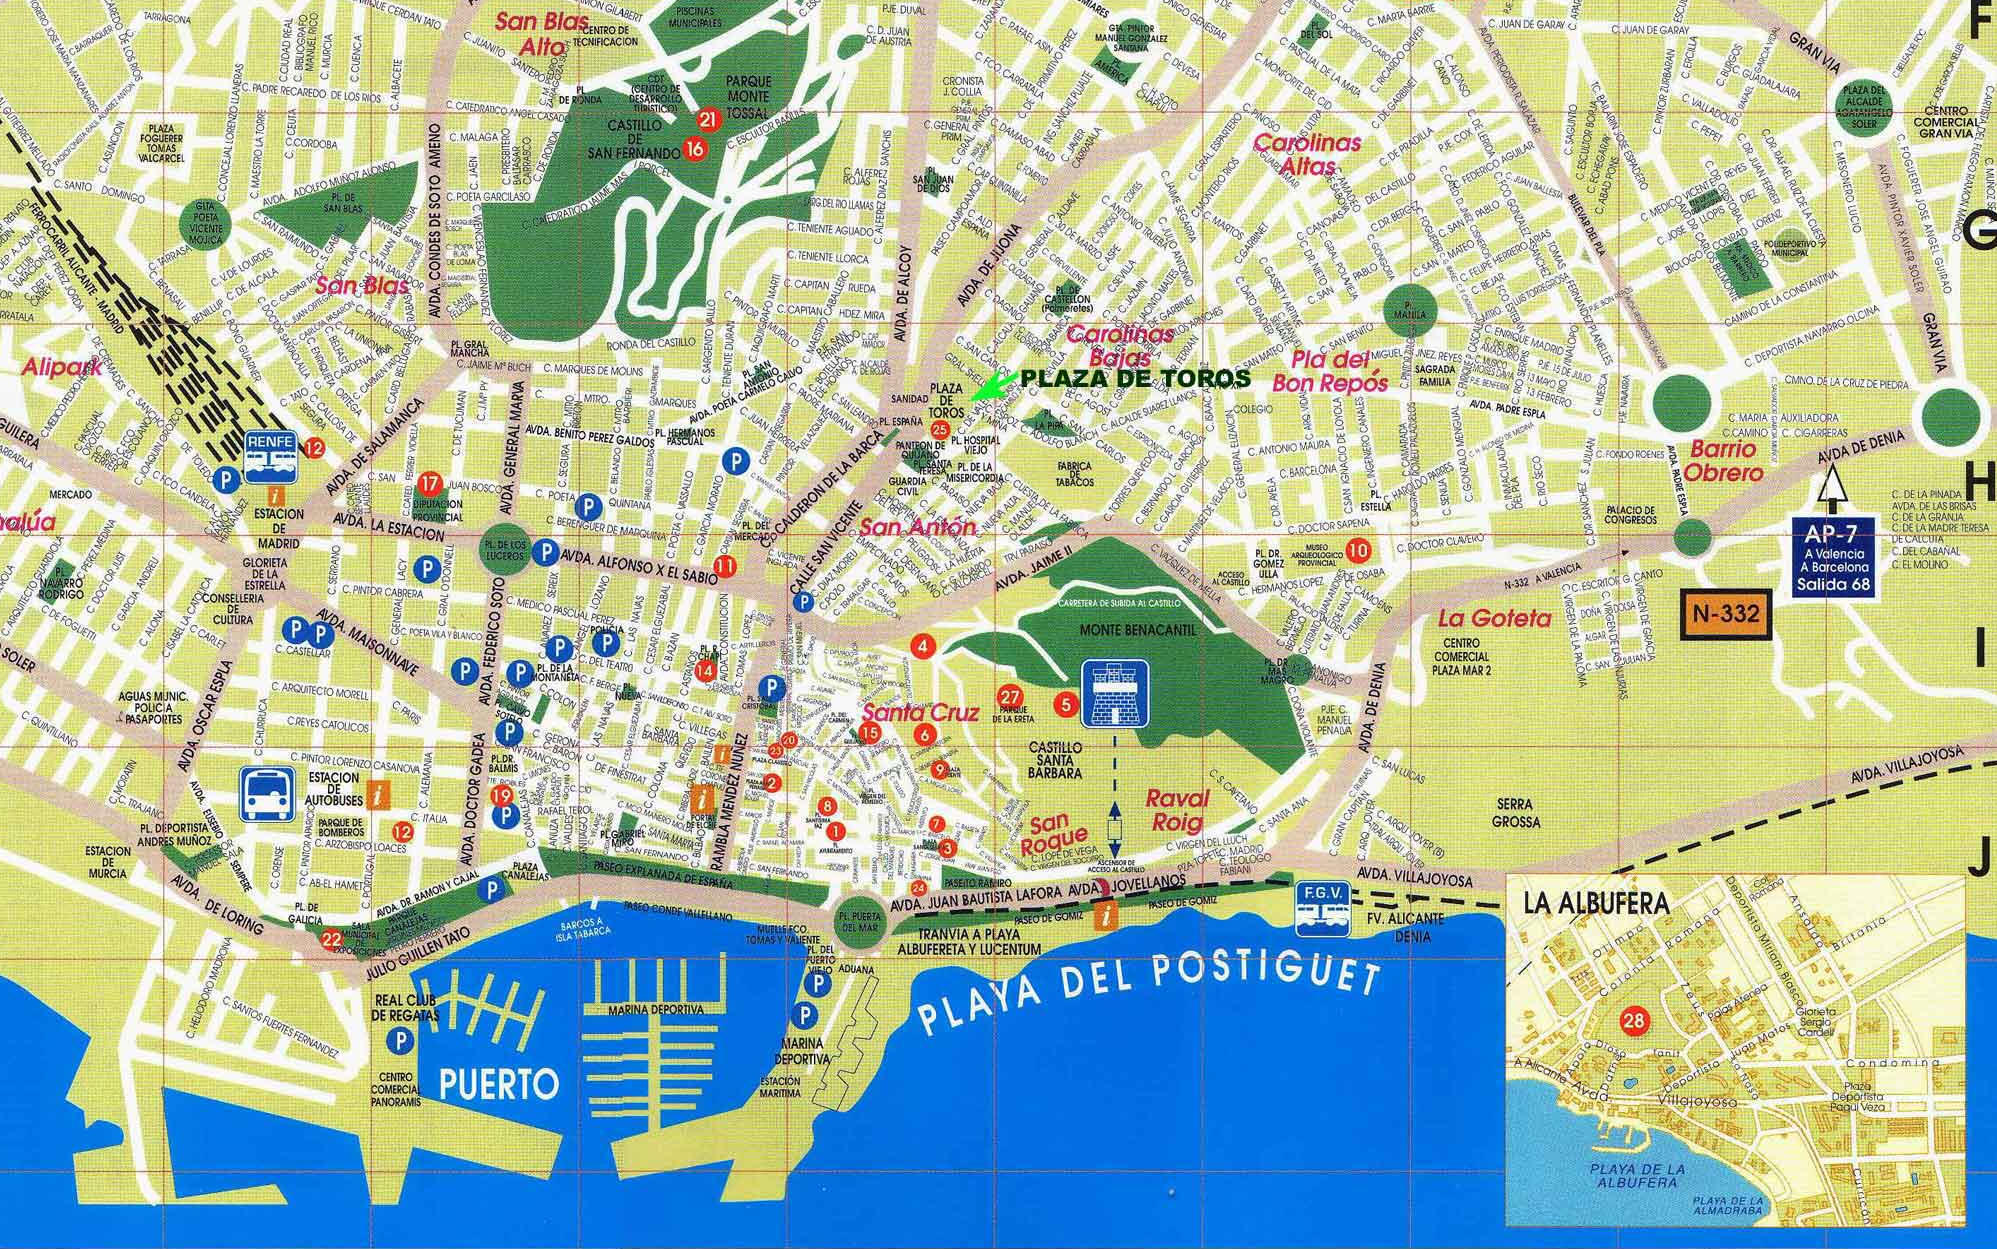 Alicante city center map